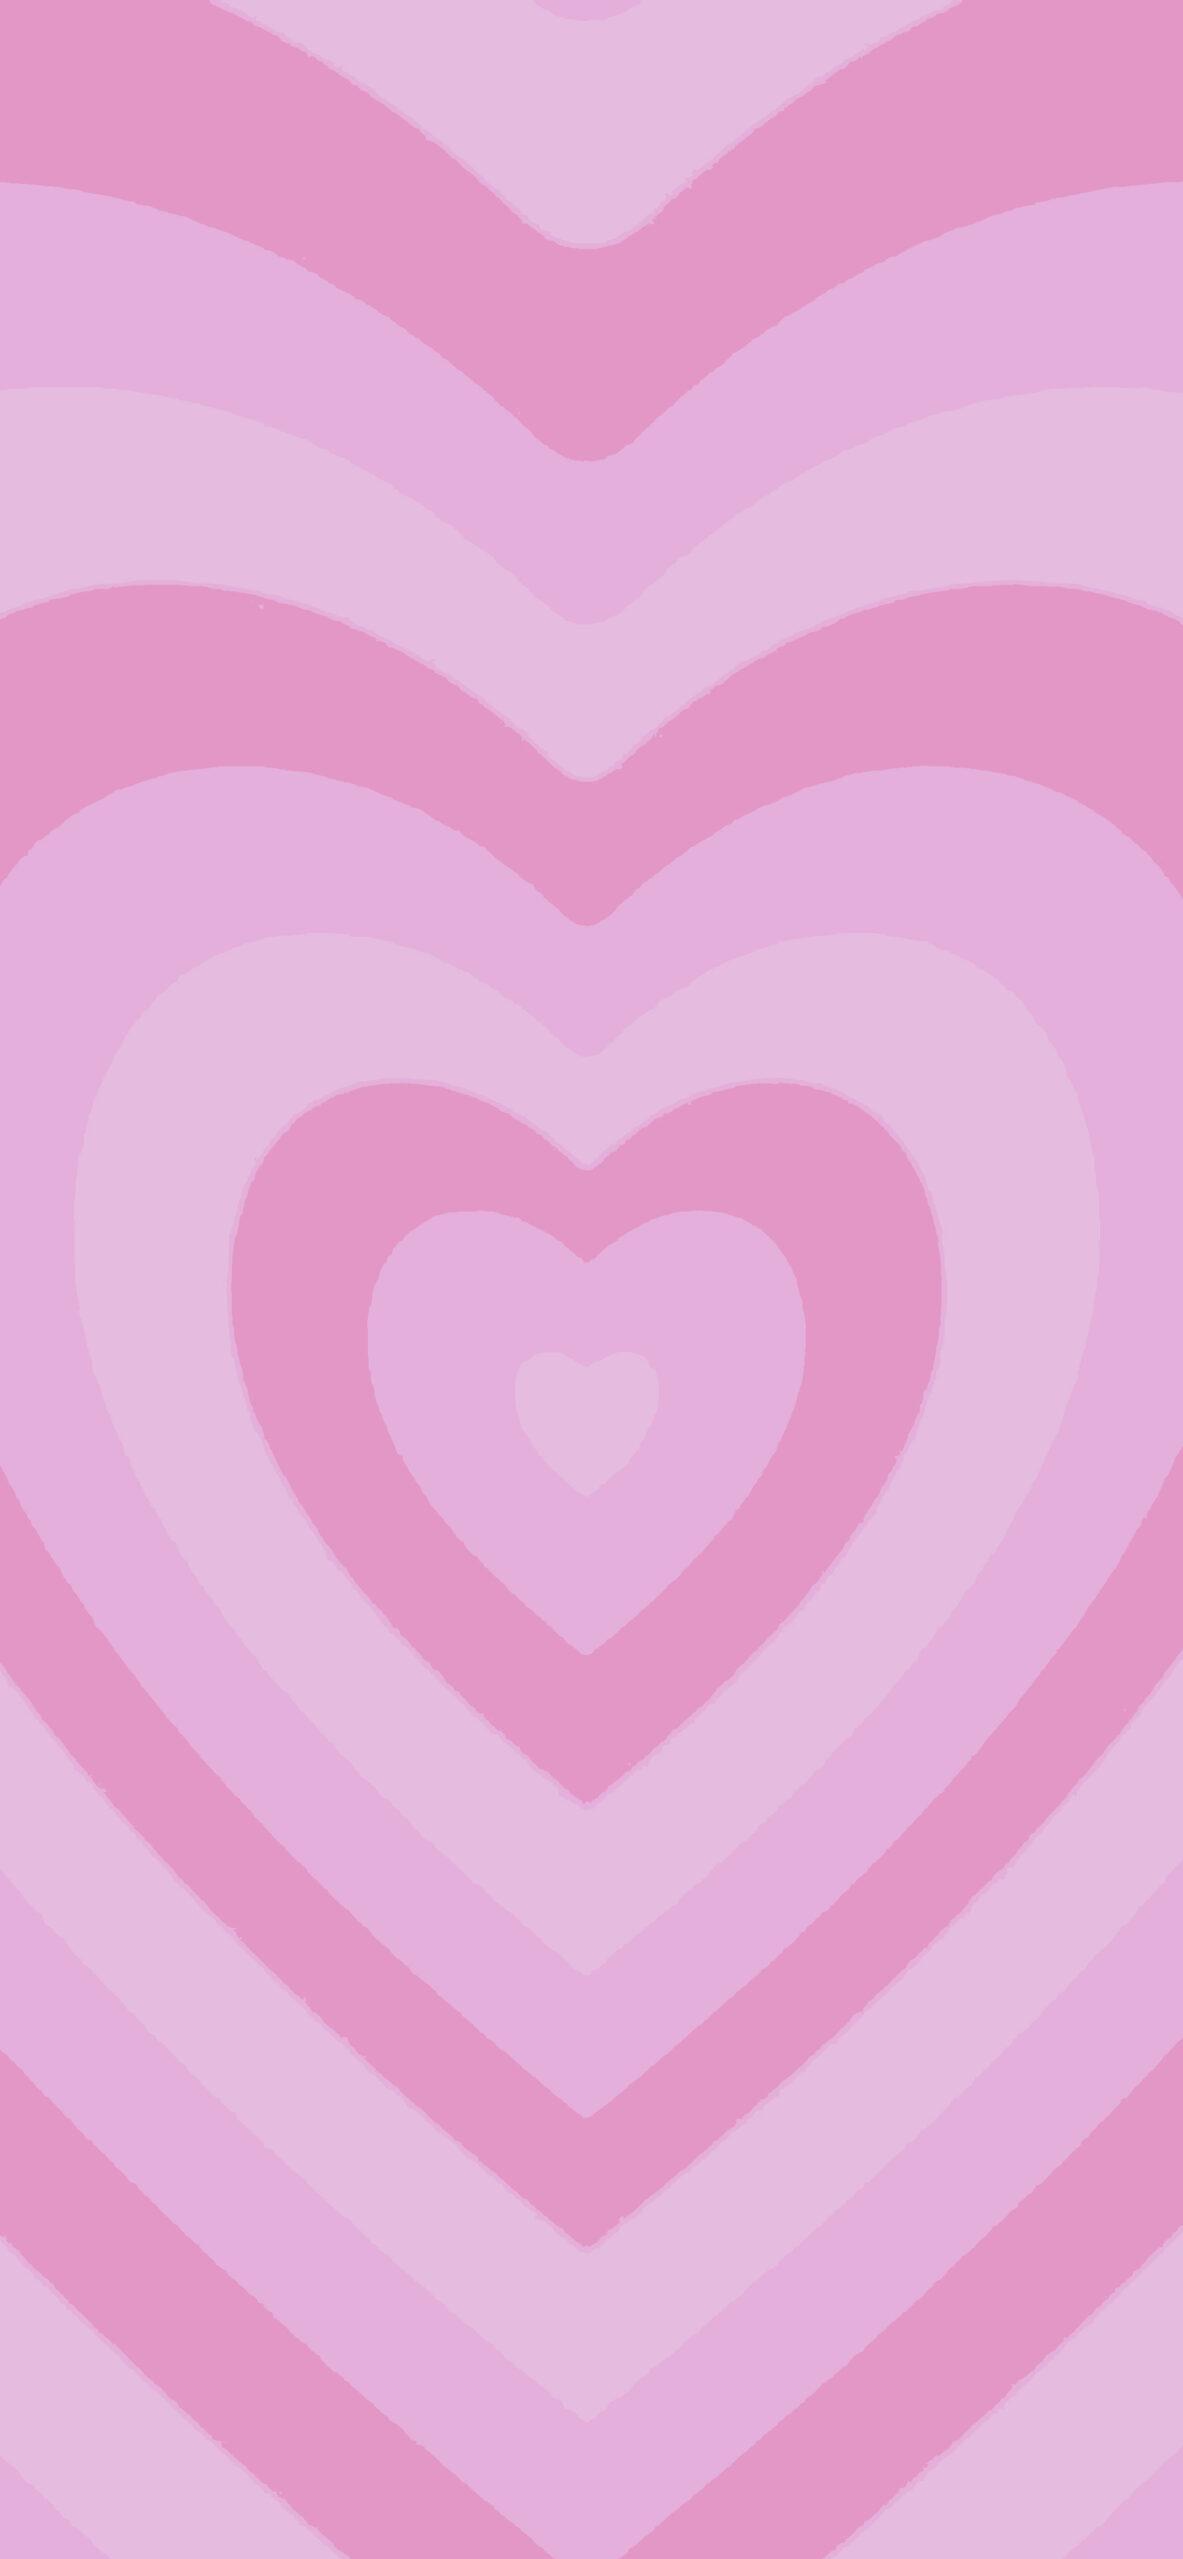 Pink Heart Wallpaper Light Aesthetic iPhone